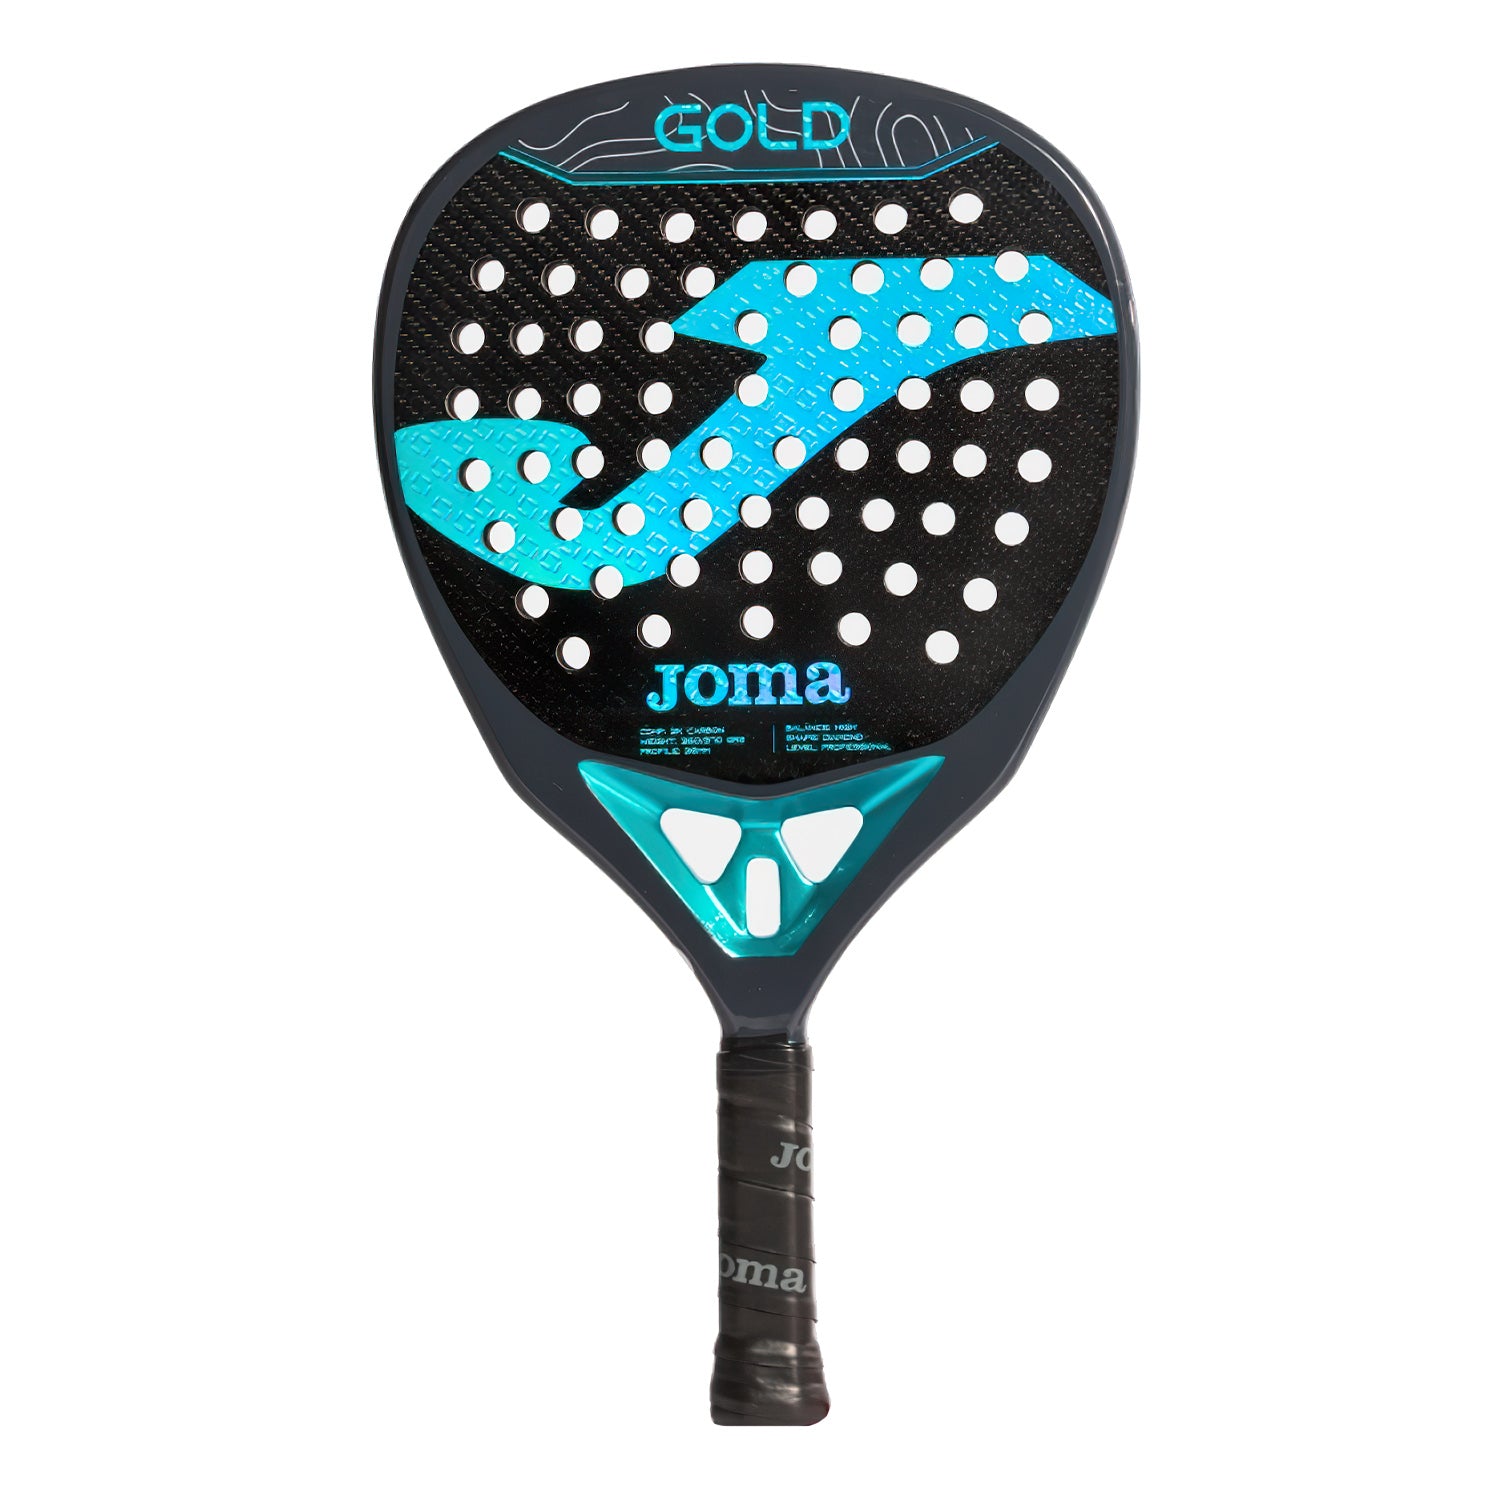 Joma Gold Black Turquoise padel racket